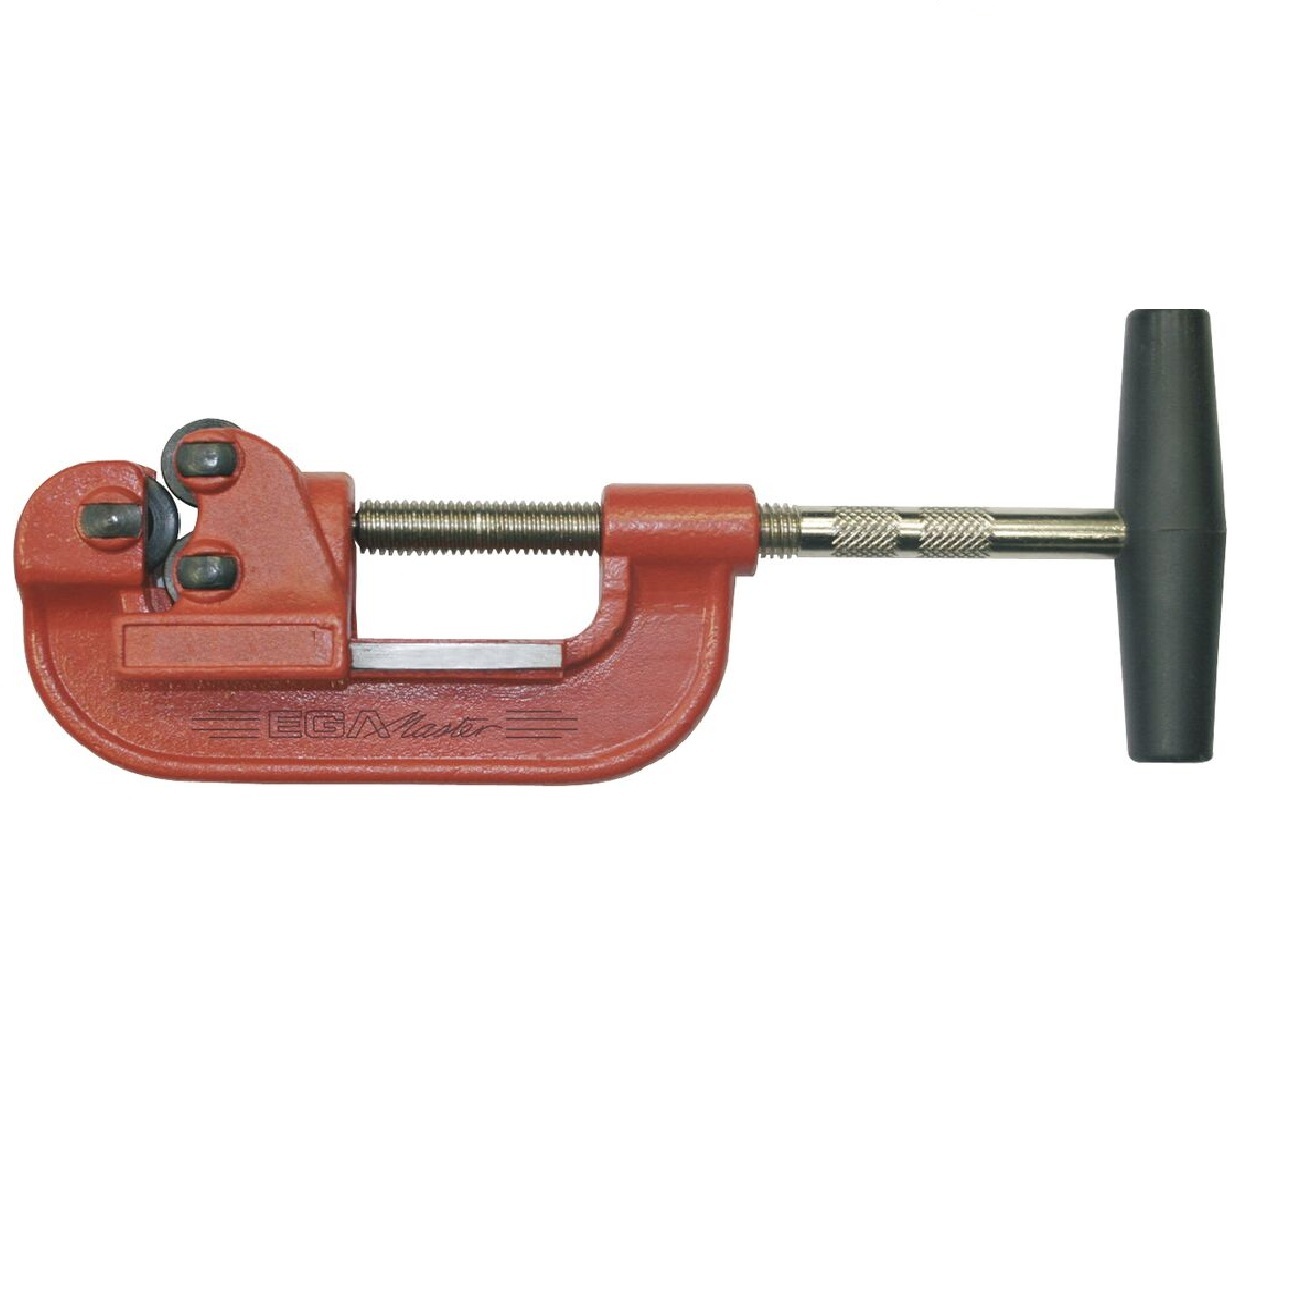 Dụng cụ cắt ống inox 1/8-2 inch Ega Master 63099